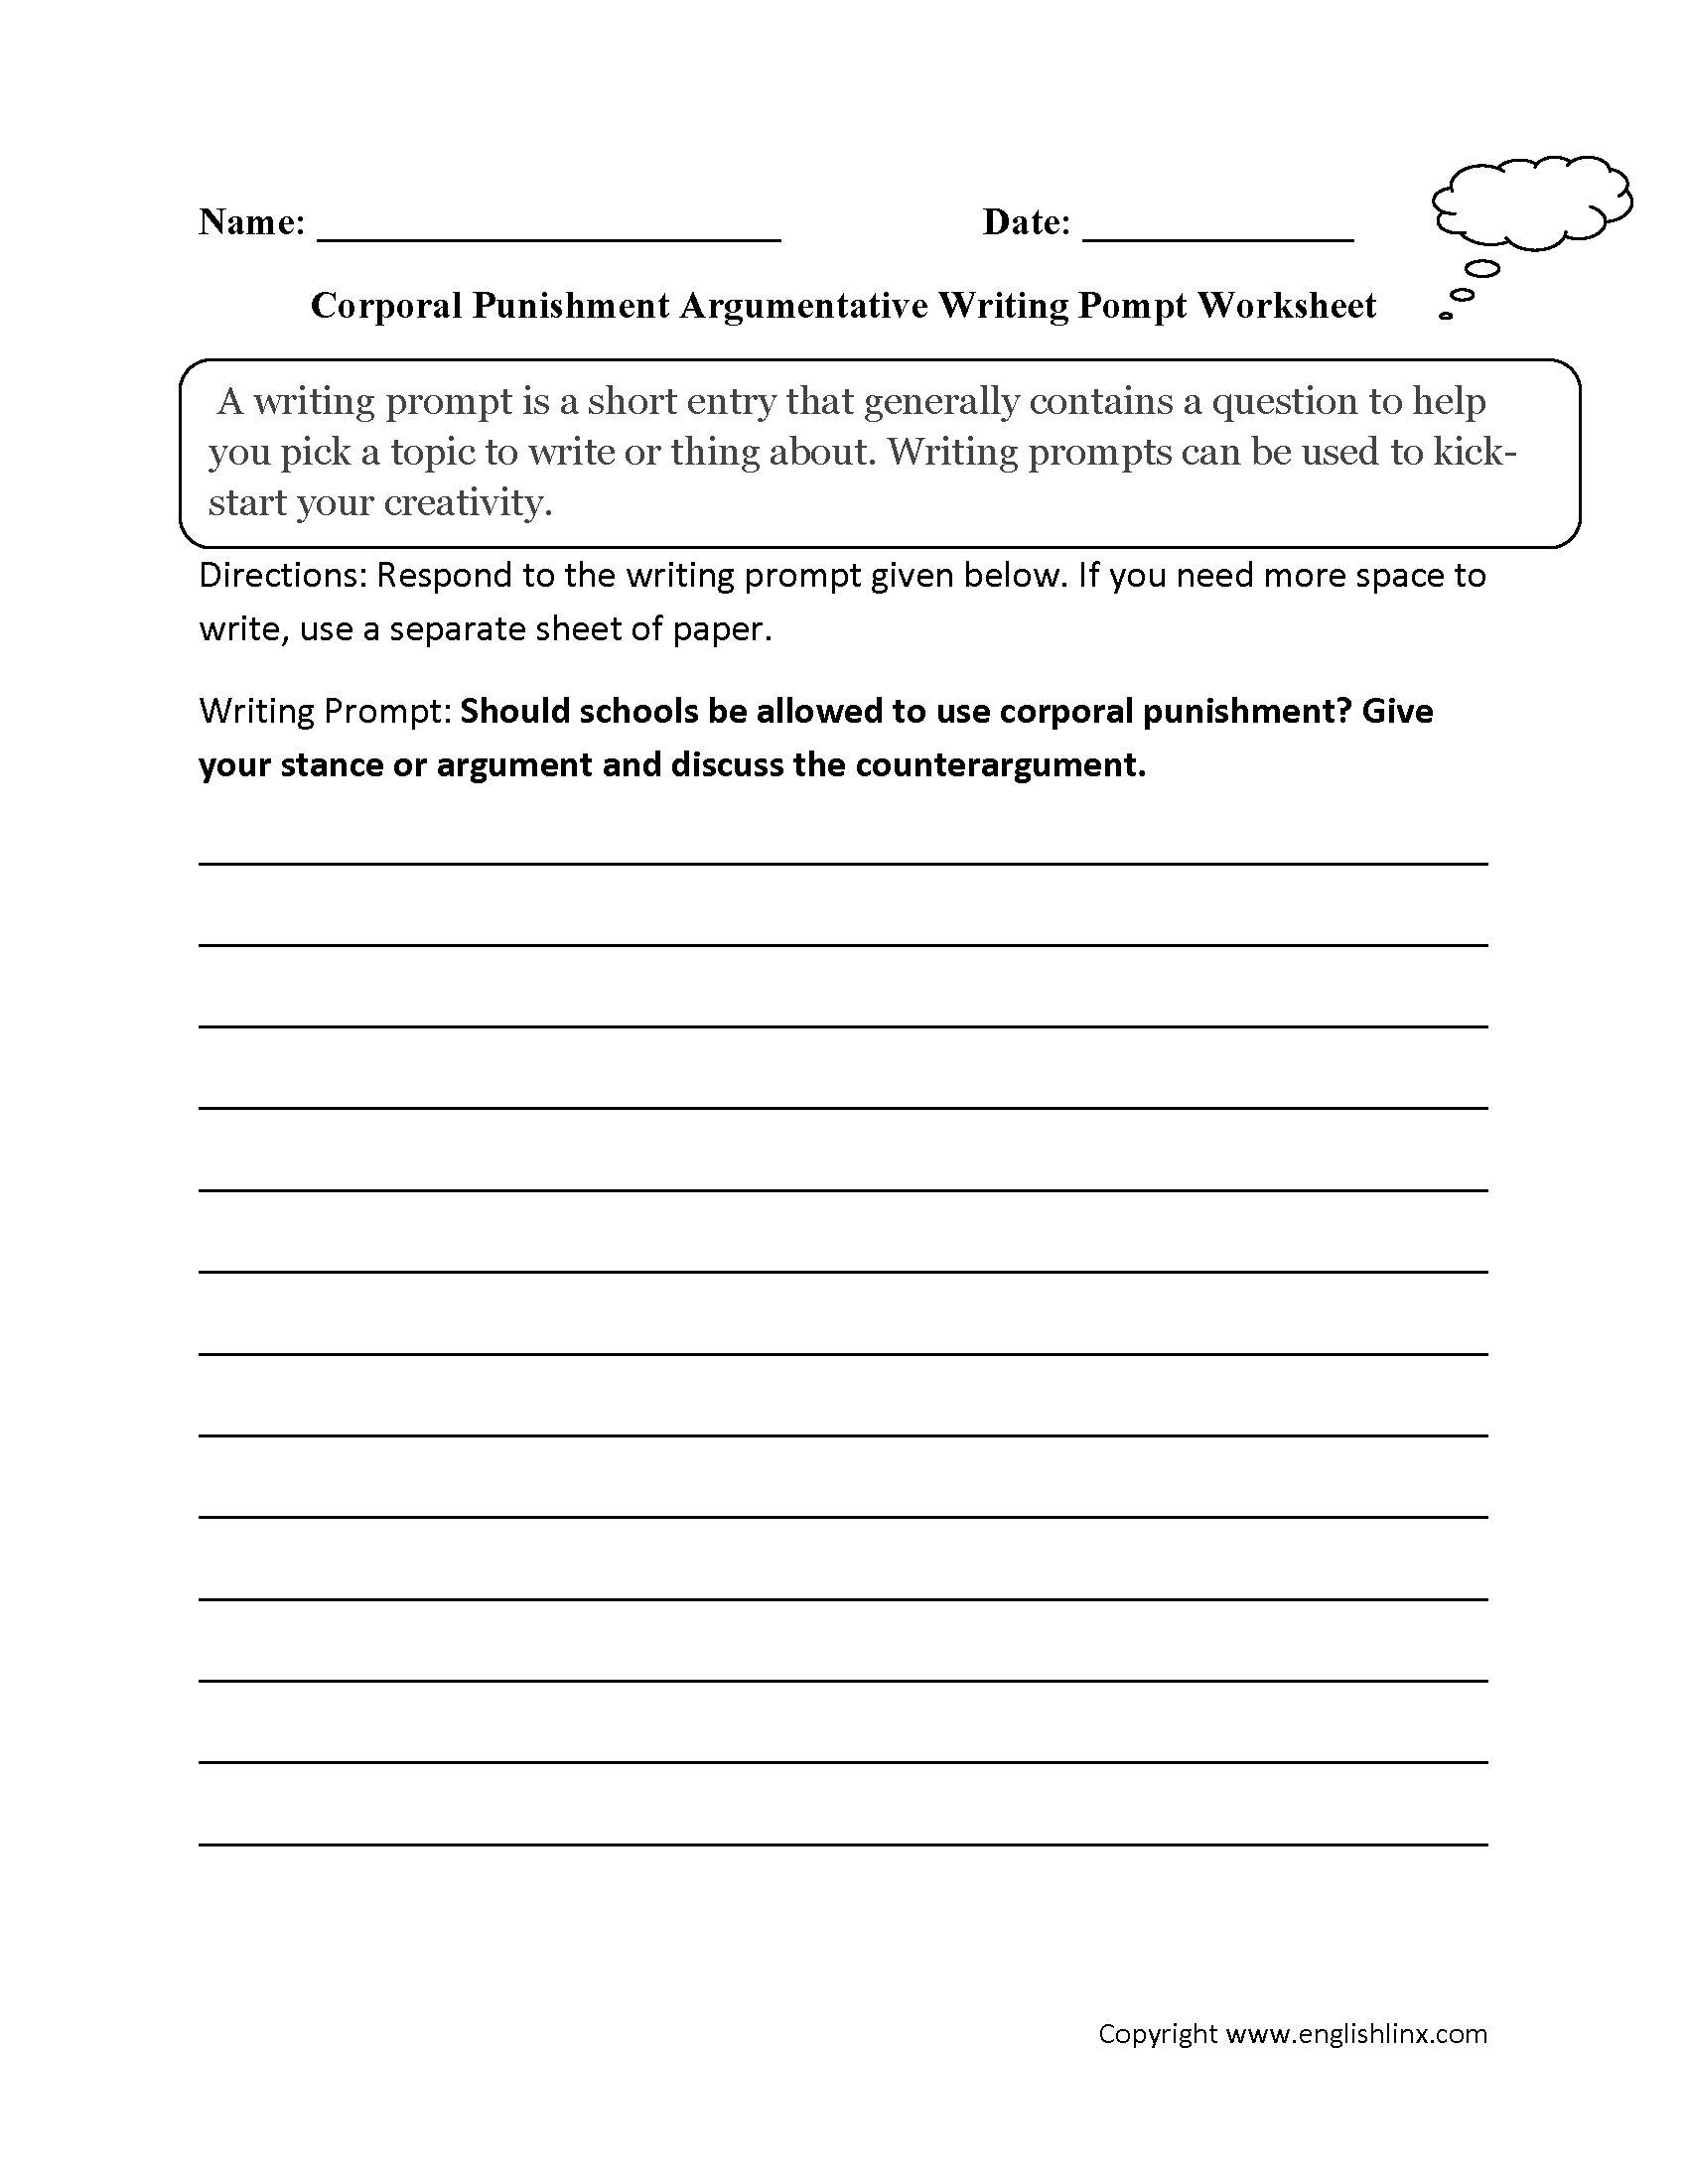 School Punishment Argumentative Writing Prompt Worksheet